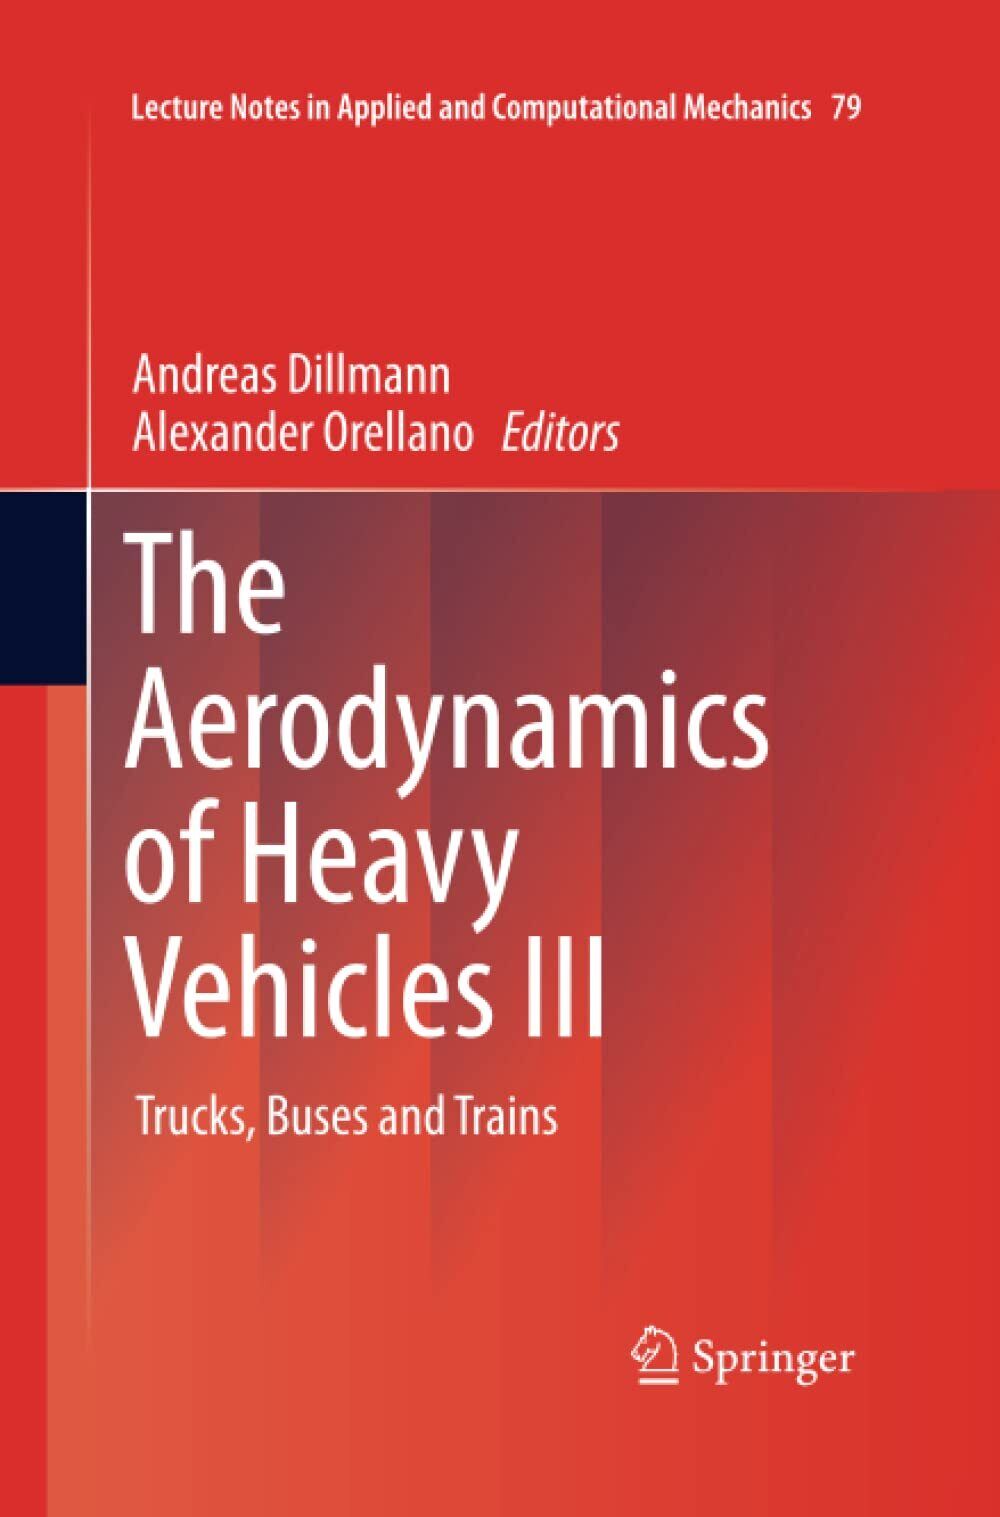 The Aerodynamics of Heavy Vehicles III - Andreas Dillmann - Springer, 2016 libro usato